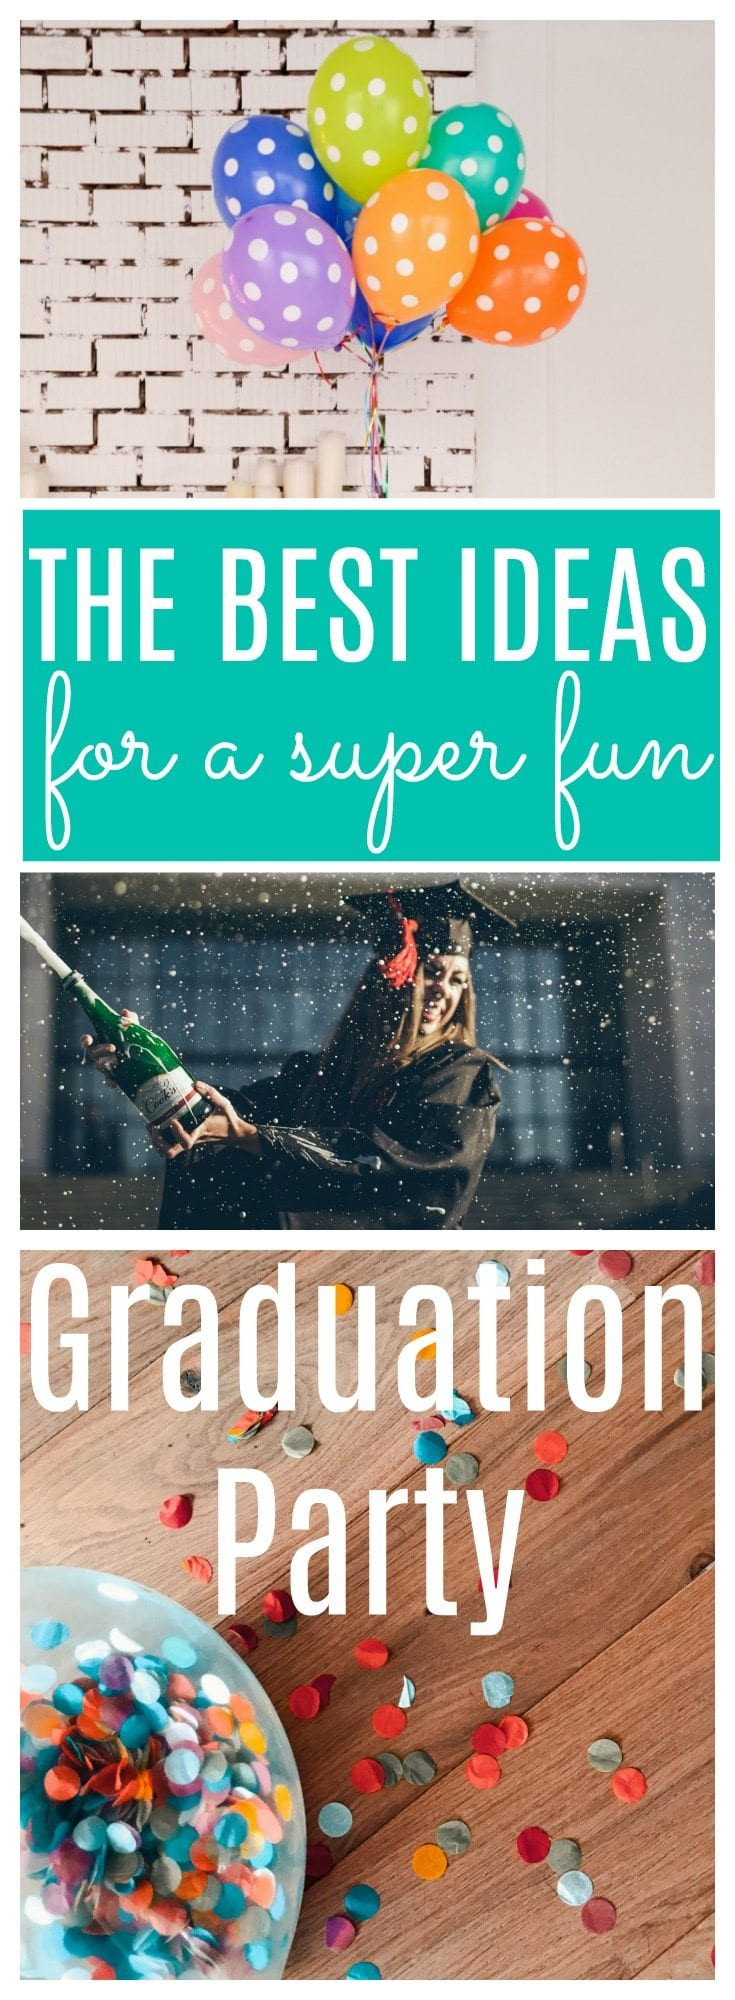 Ideas For Senior Graduation Party
 Graduation Party Ideas How to Celebrate Your Senior s Big Day